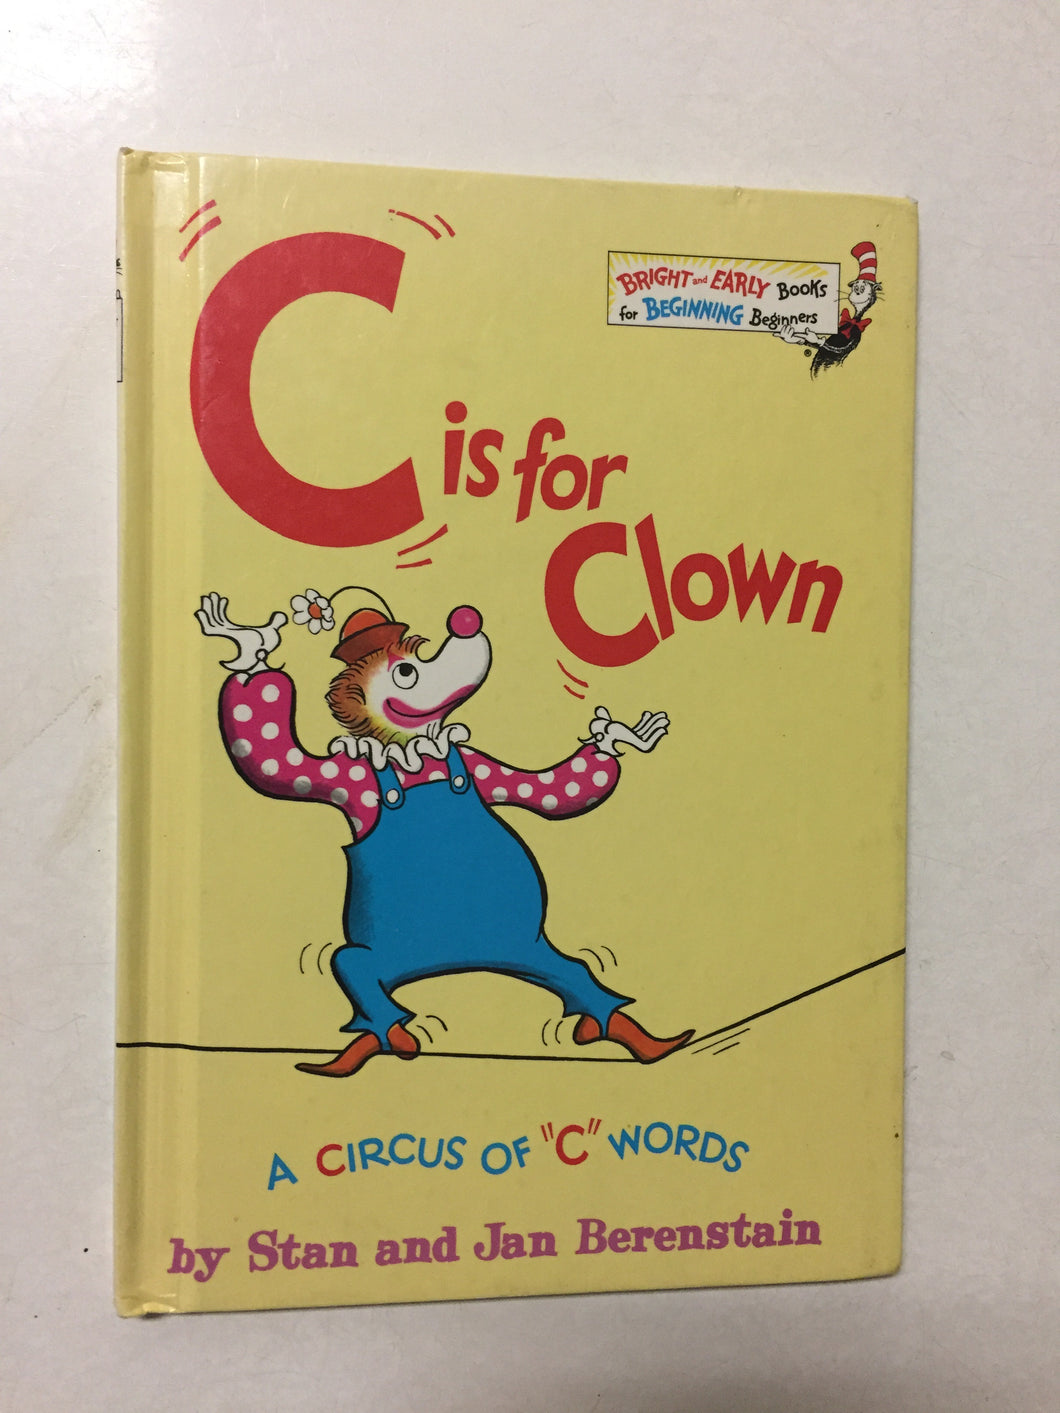 C is for Clowns - Slick Cat Books 